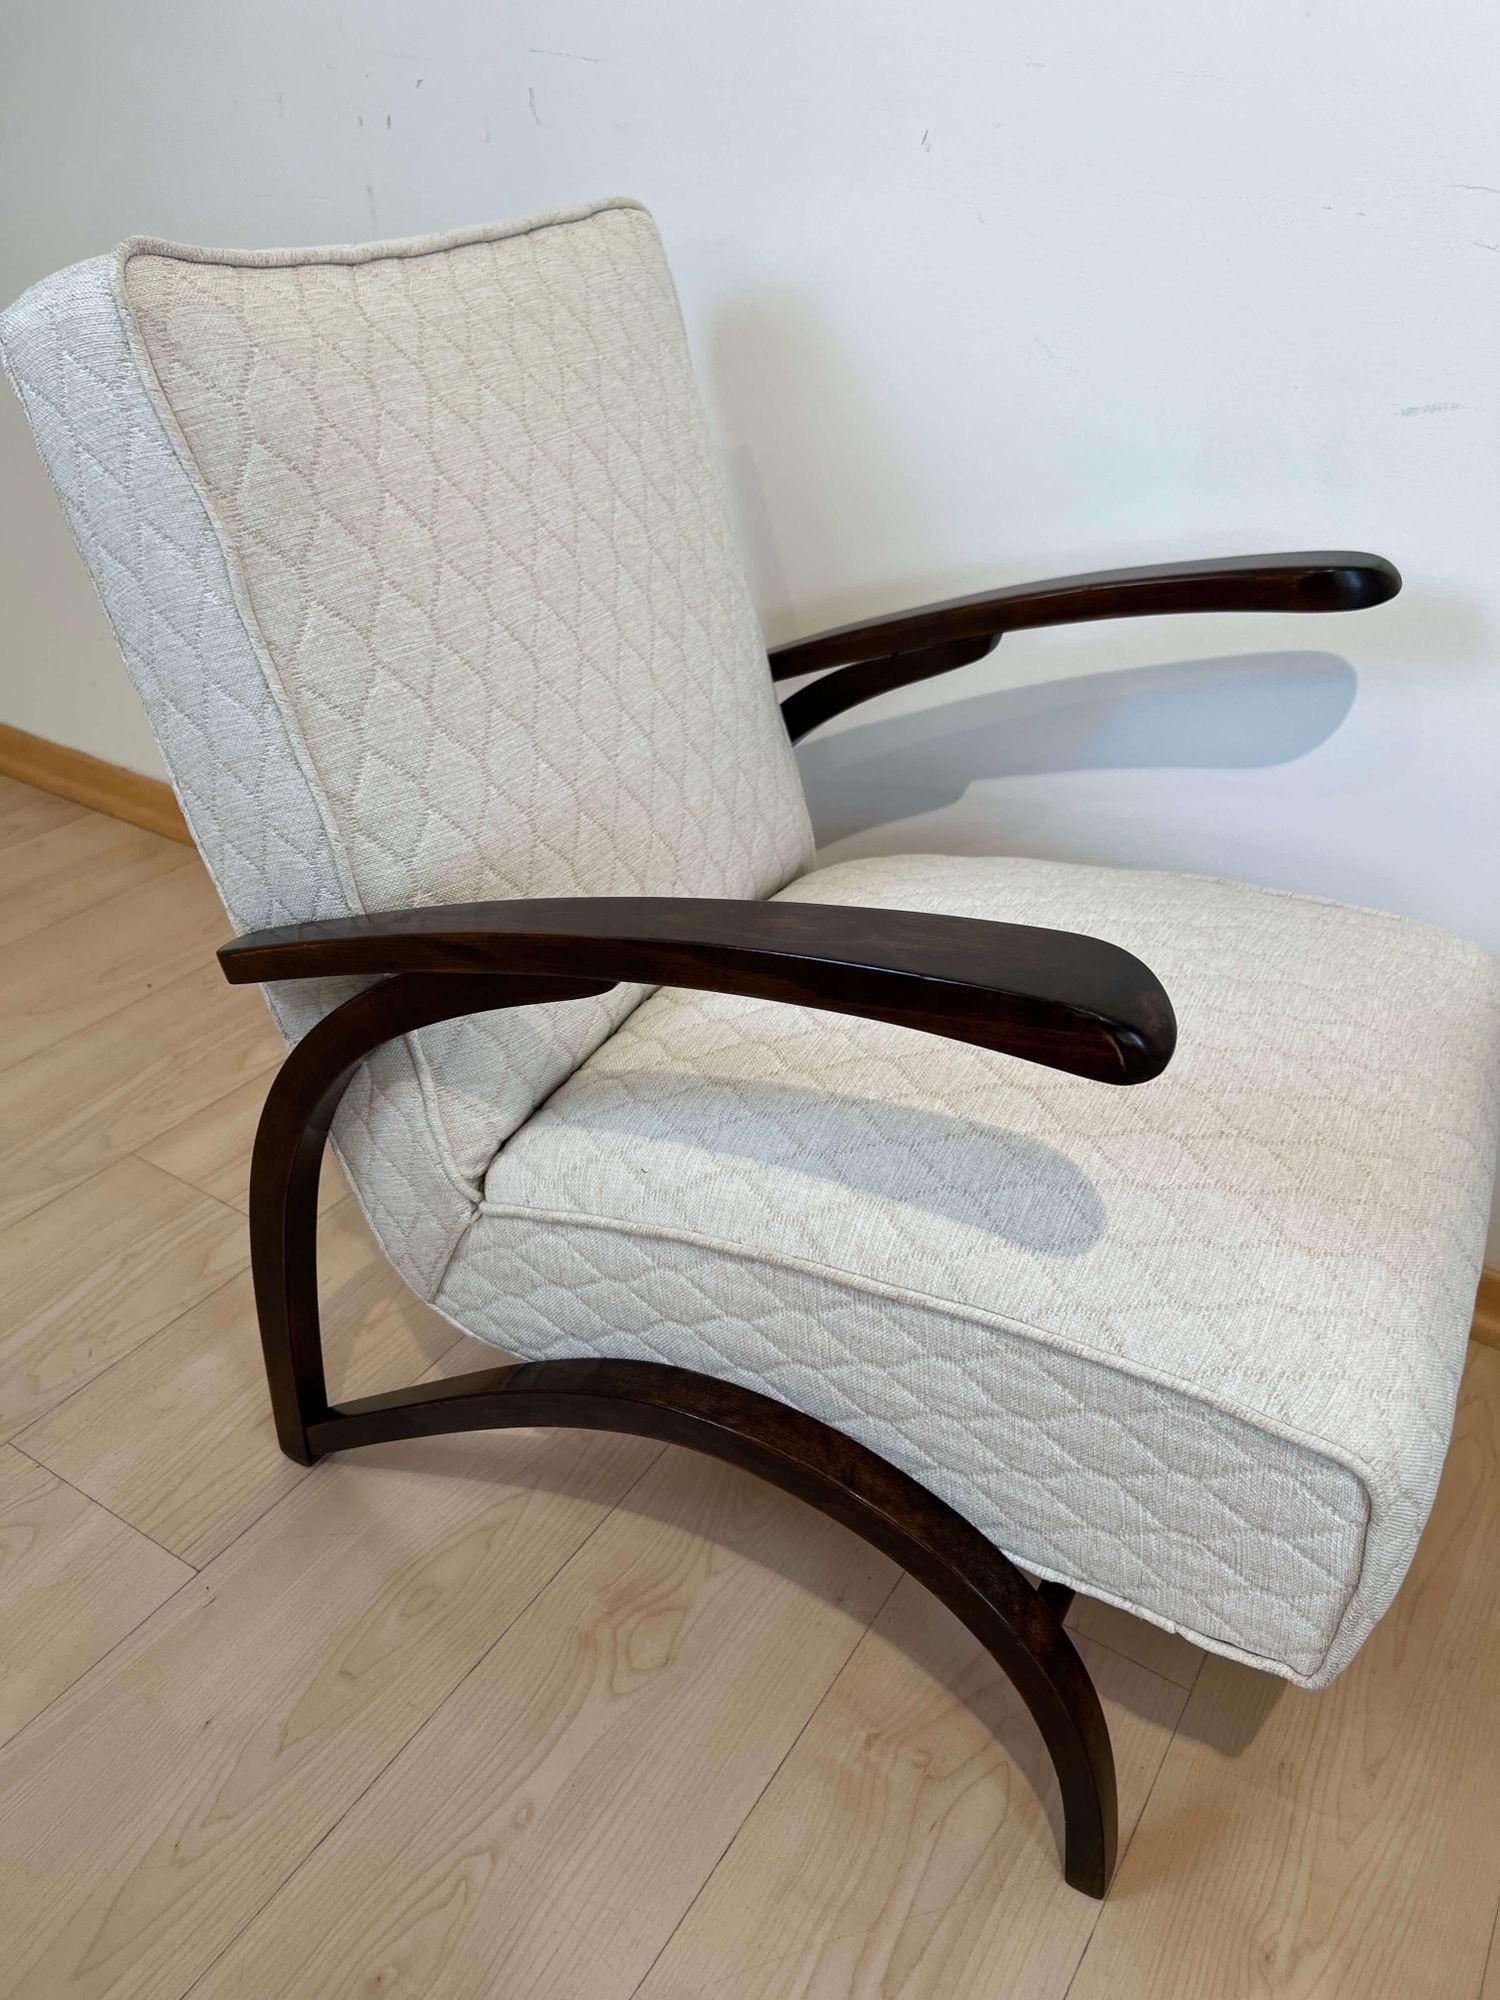 Pair of Art Deco Lounge Chairs by J. Halabala, Czech Republic circa 1930 For Sale 5